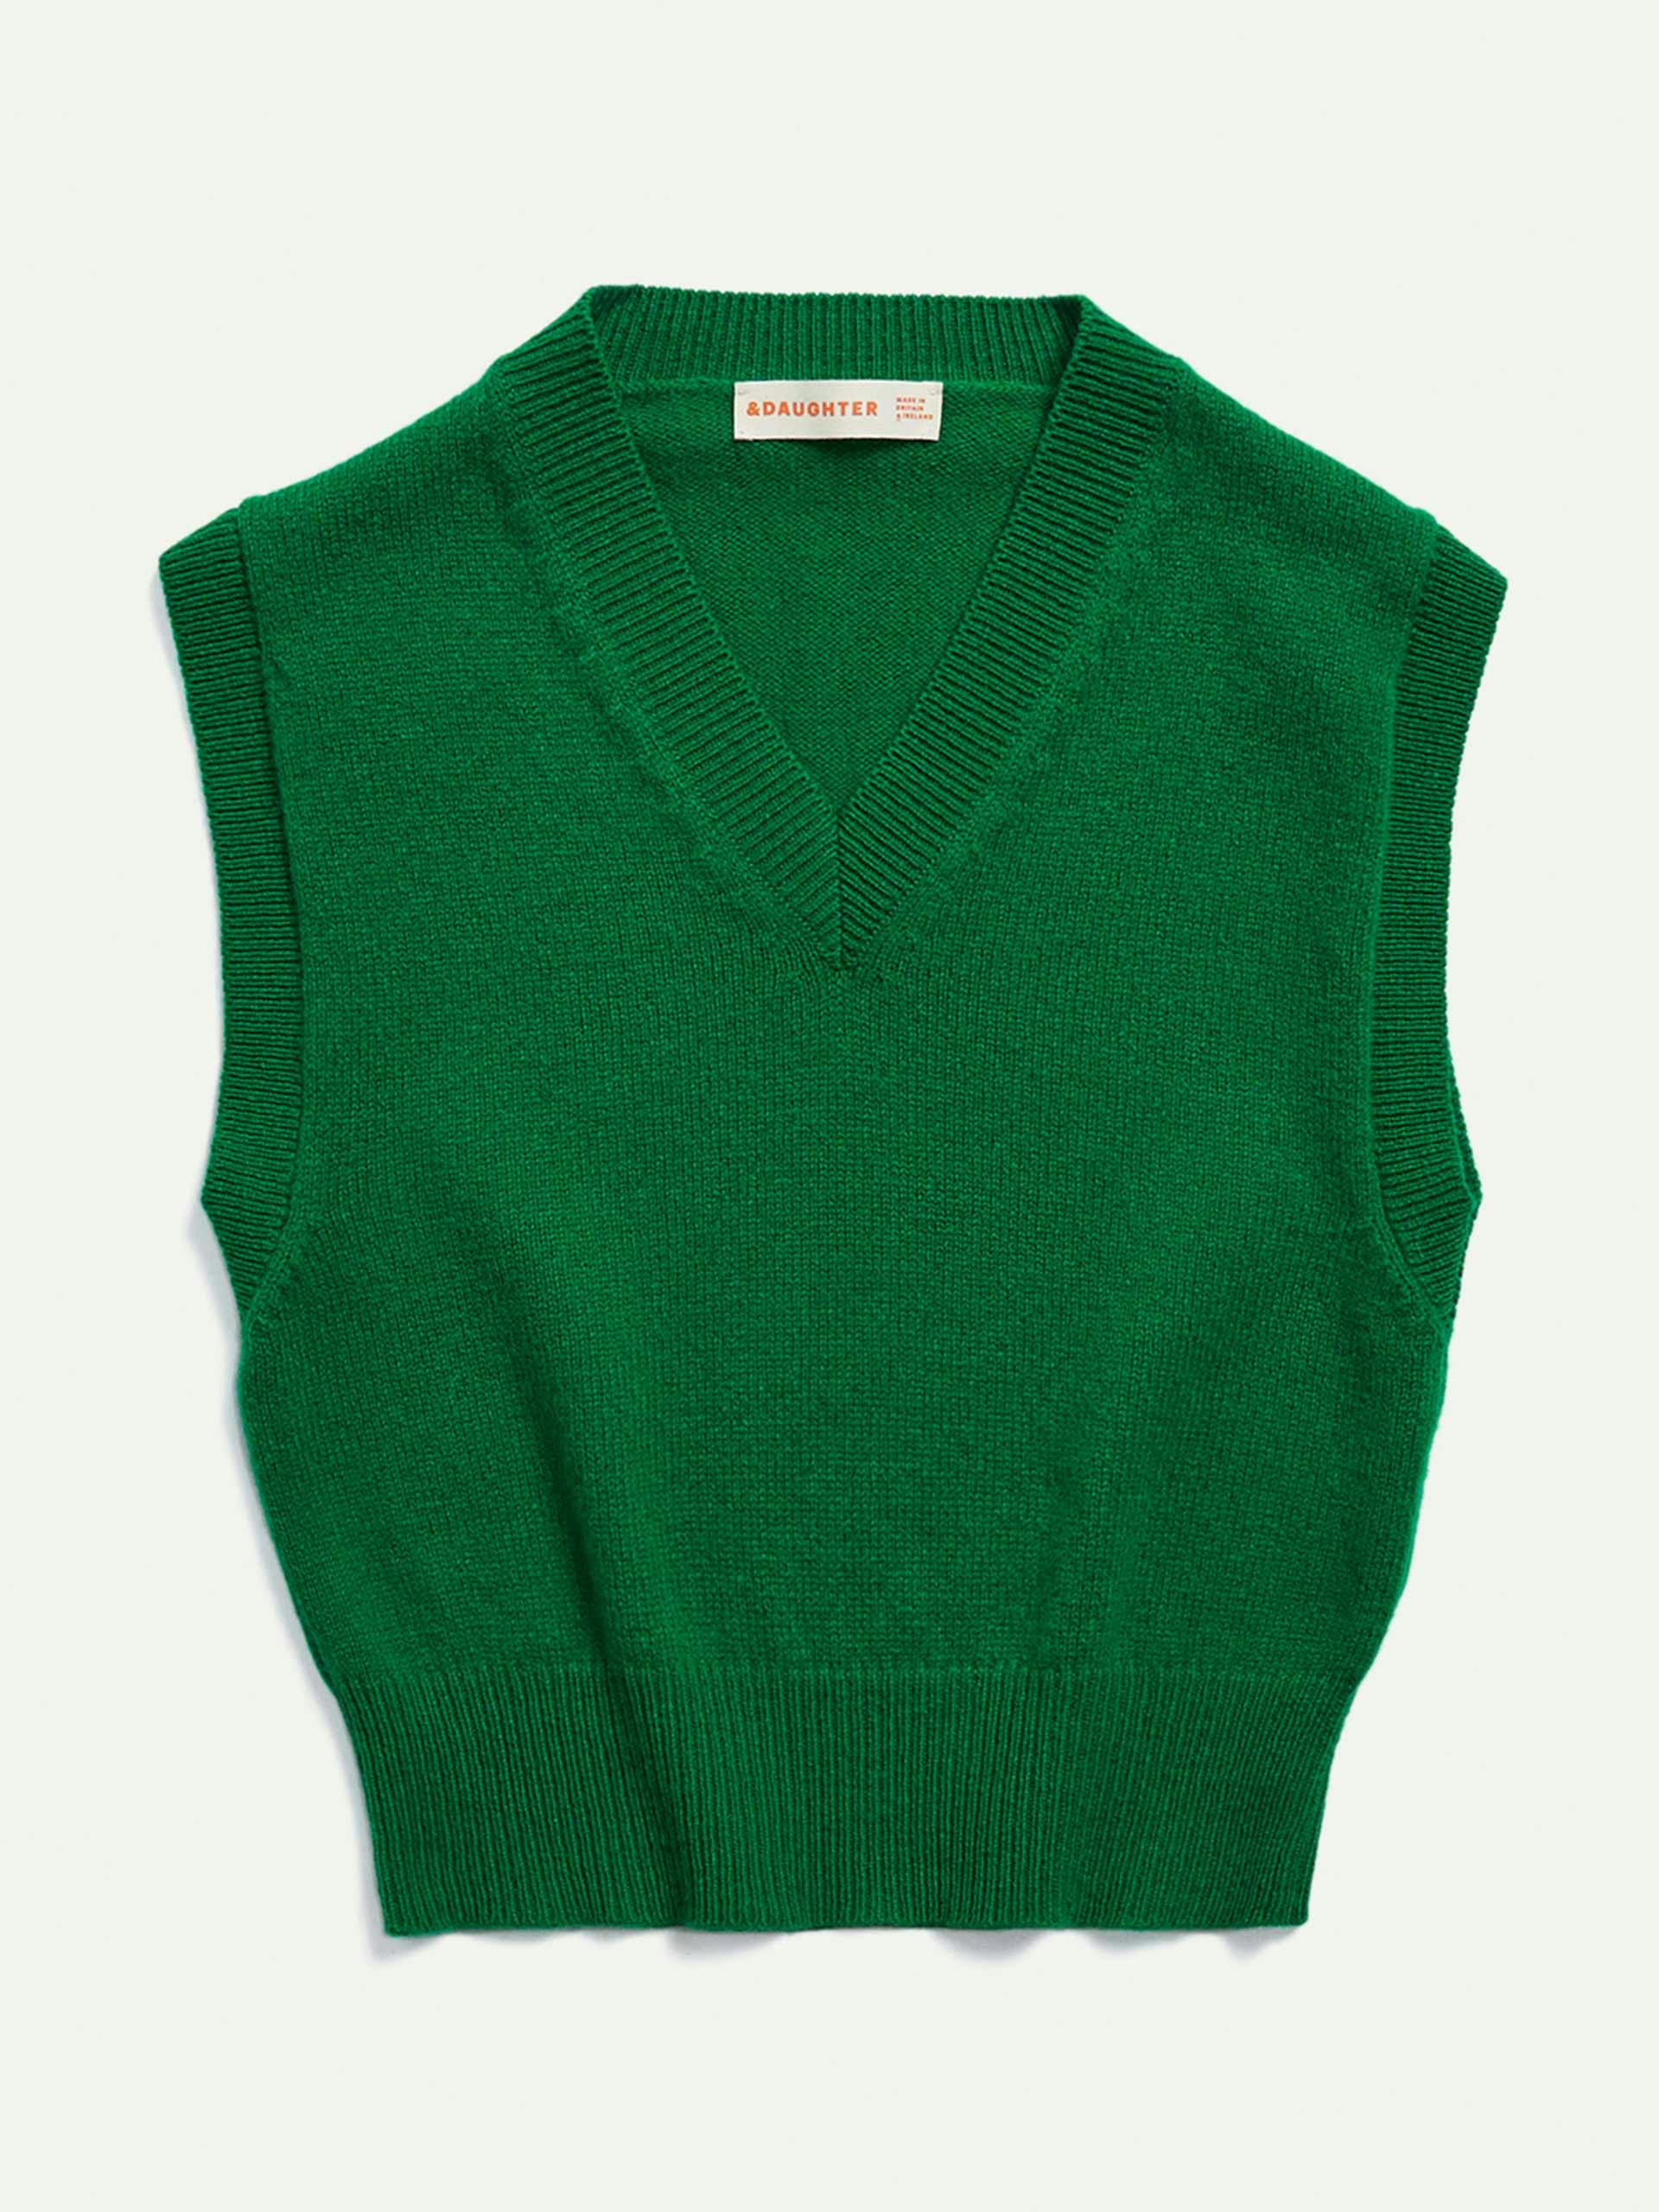 Green Athea Geelong knitted tank